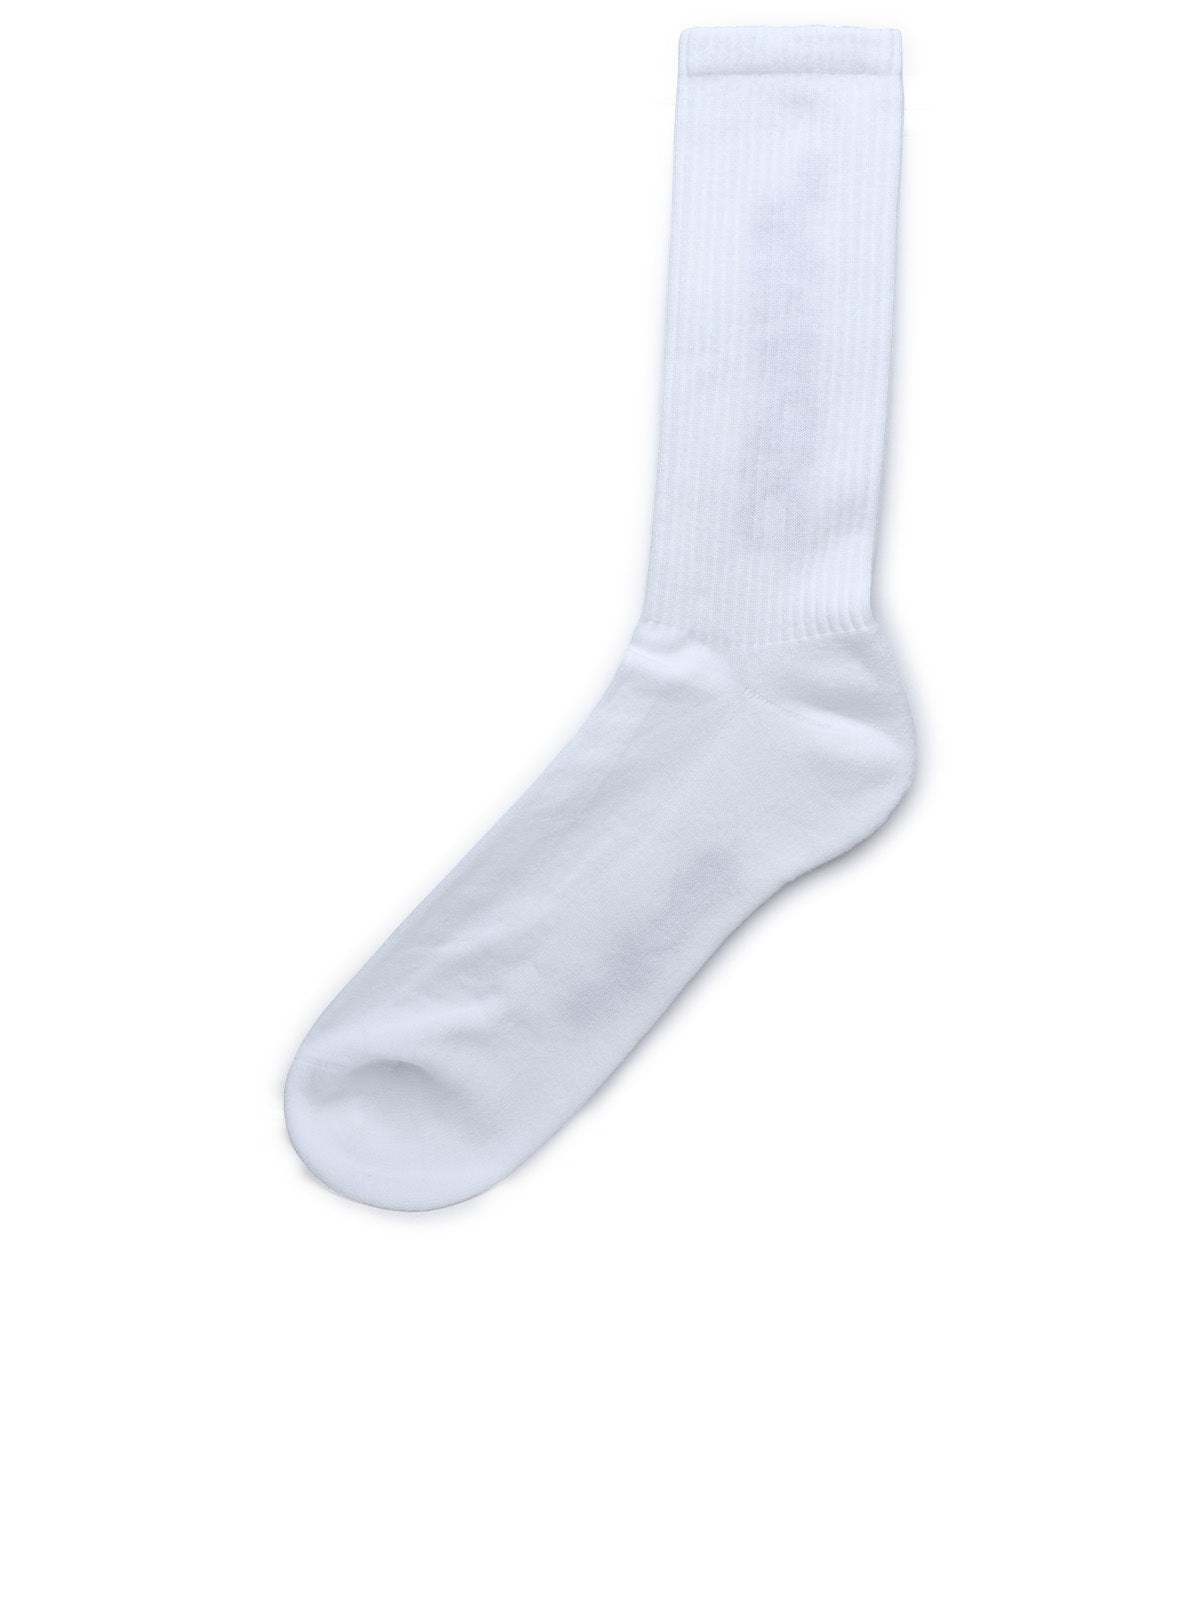 Off-White Man 'Bookish Mid' White Cotton Blend Socks - 2